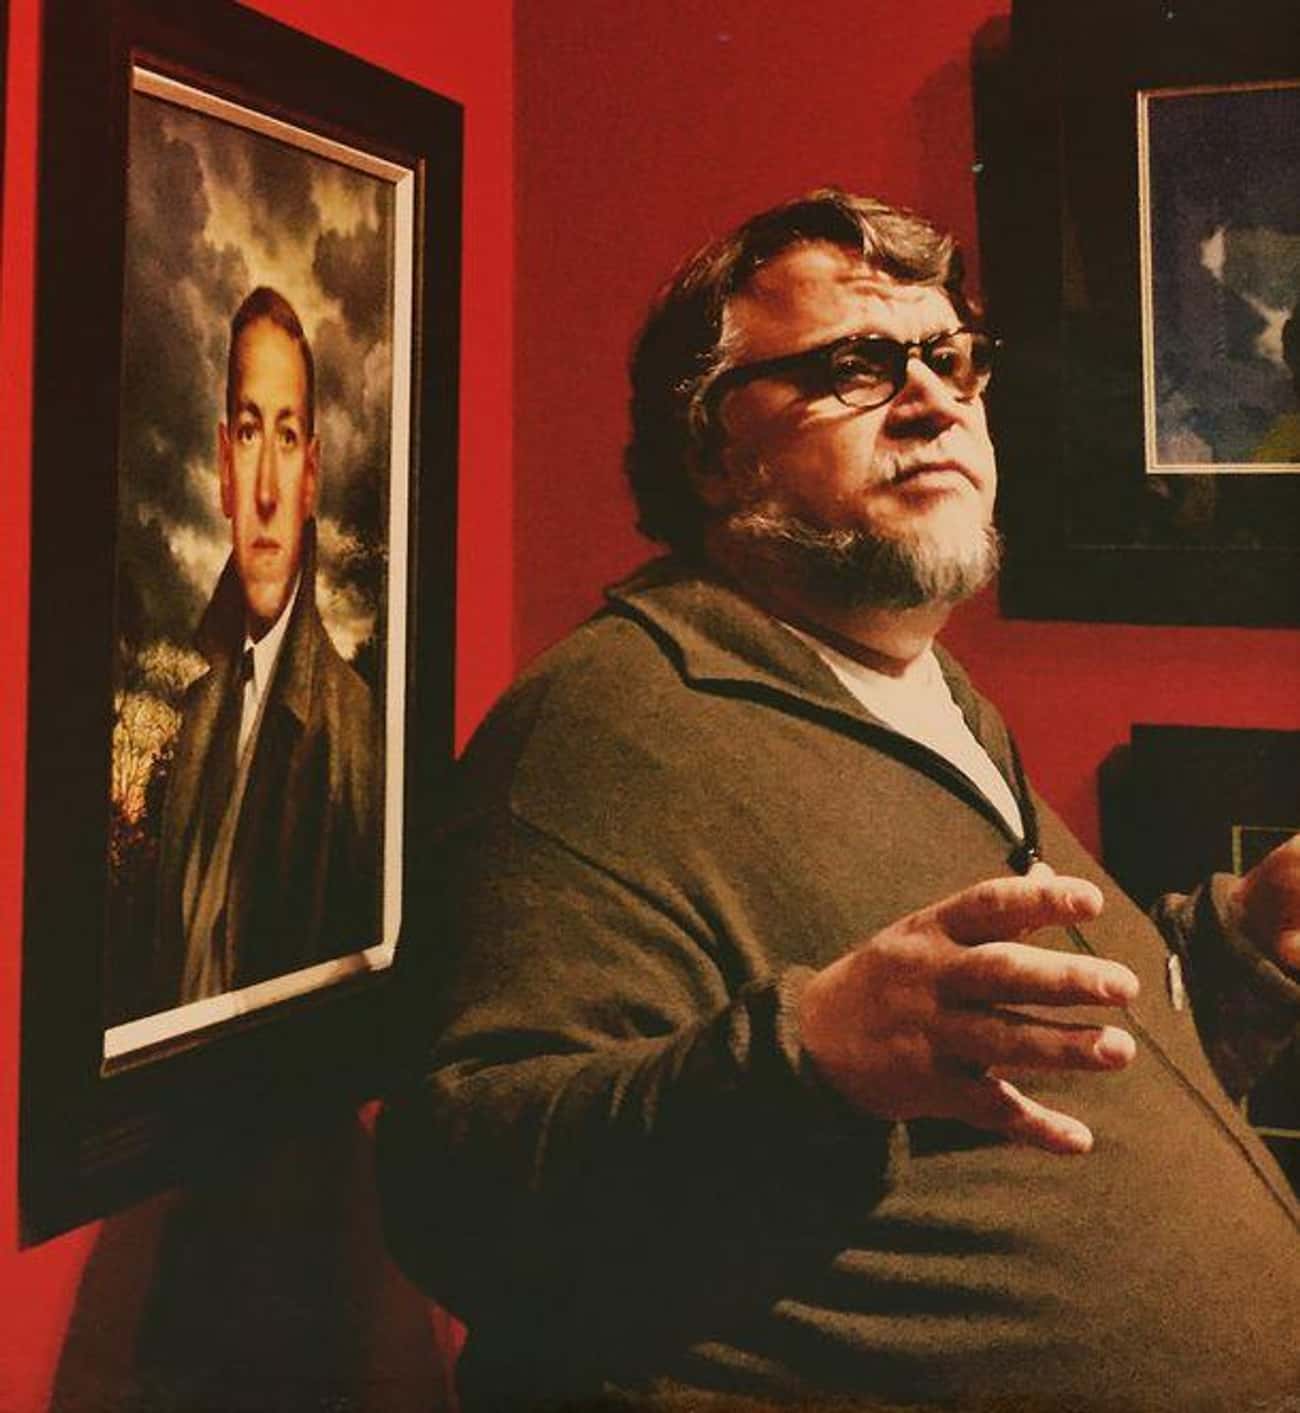 Del Toro's Vision Includes A Bit More Diversity